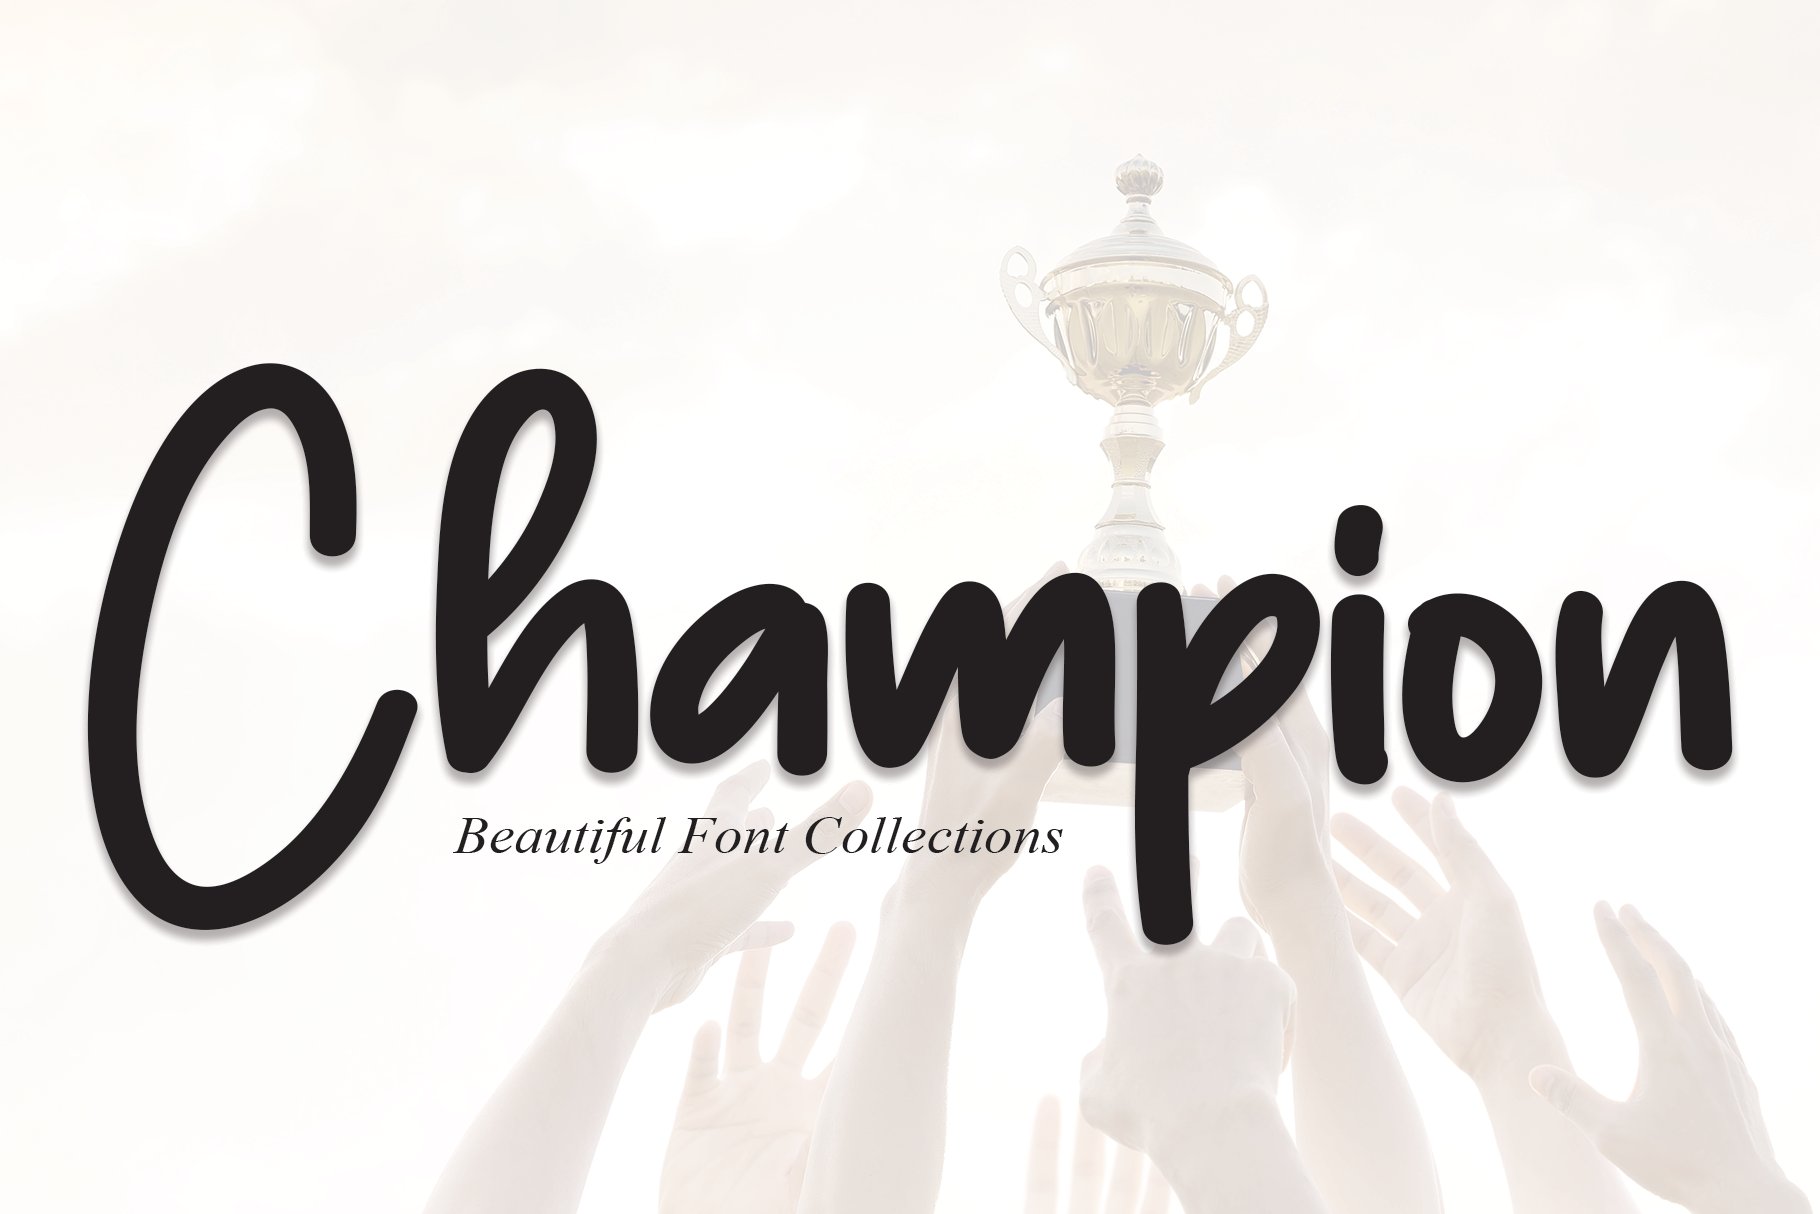 Champion | Script Font cover image.